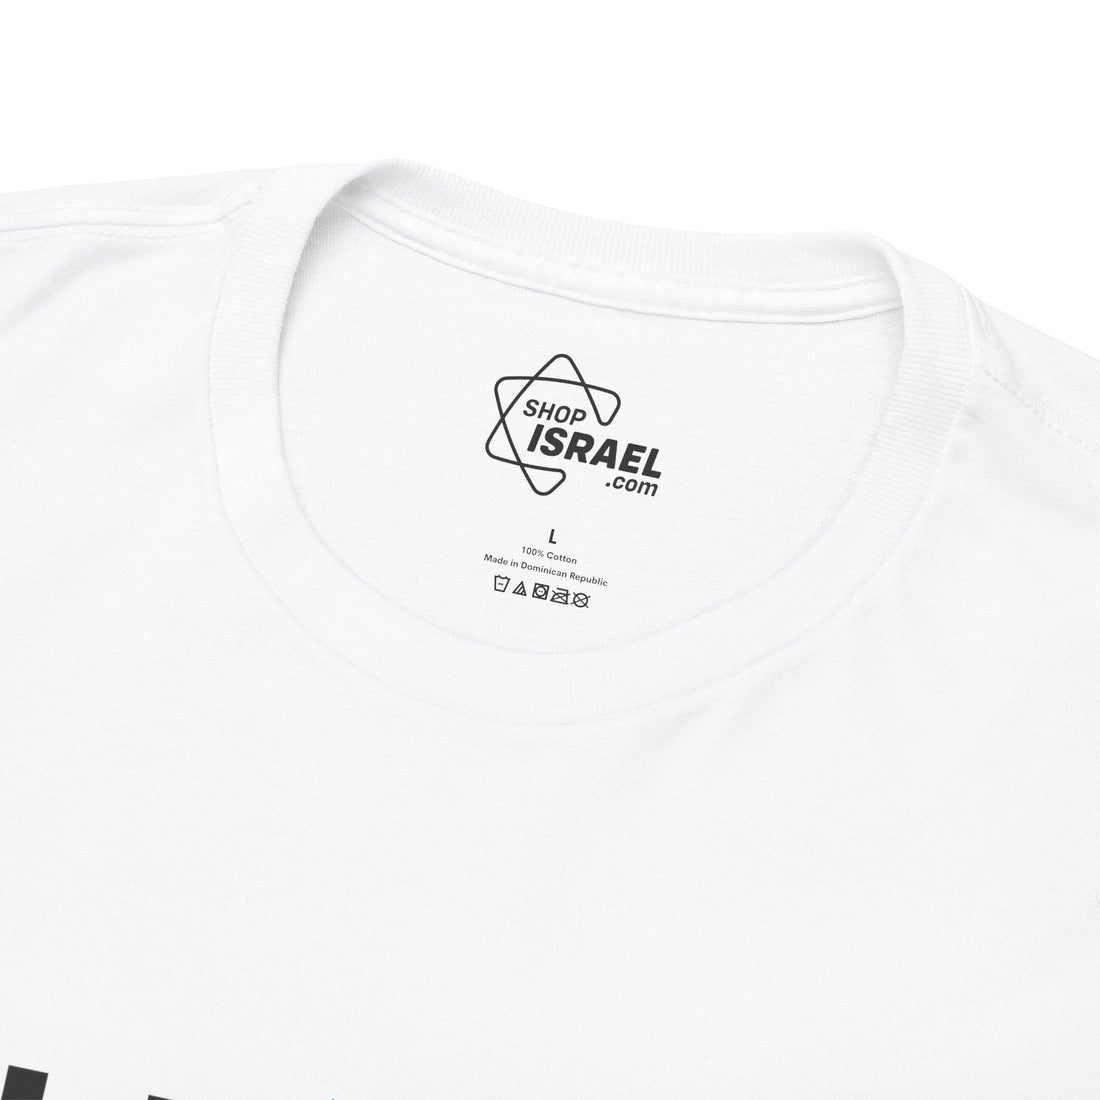 Chosen T-Shirt - Shop Israel